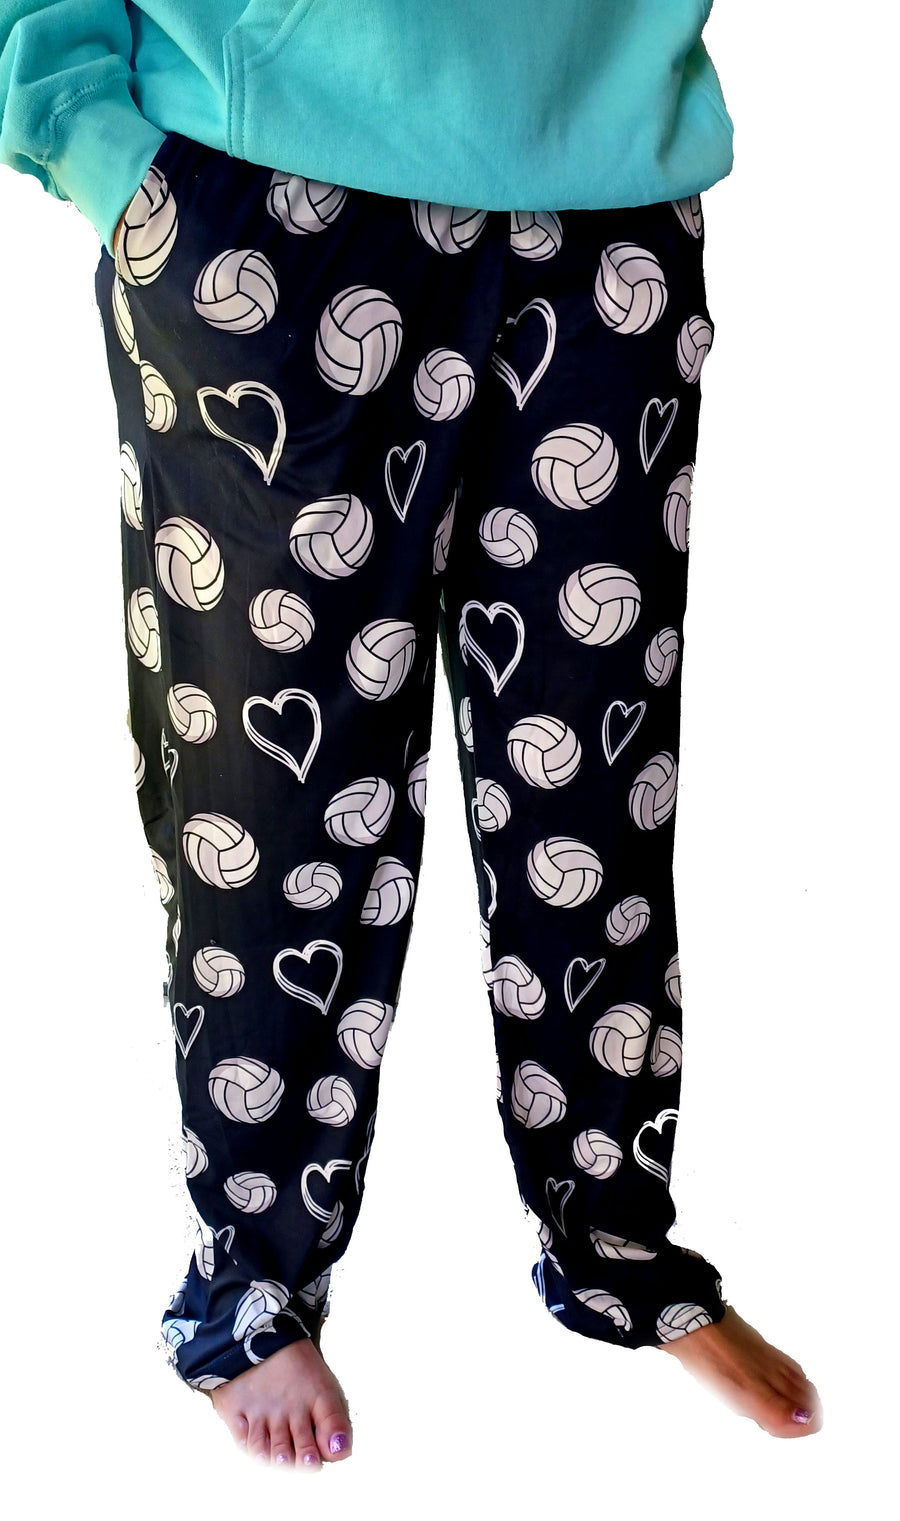 Boxercraft Volleyball Cotton Sleepwear Pants